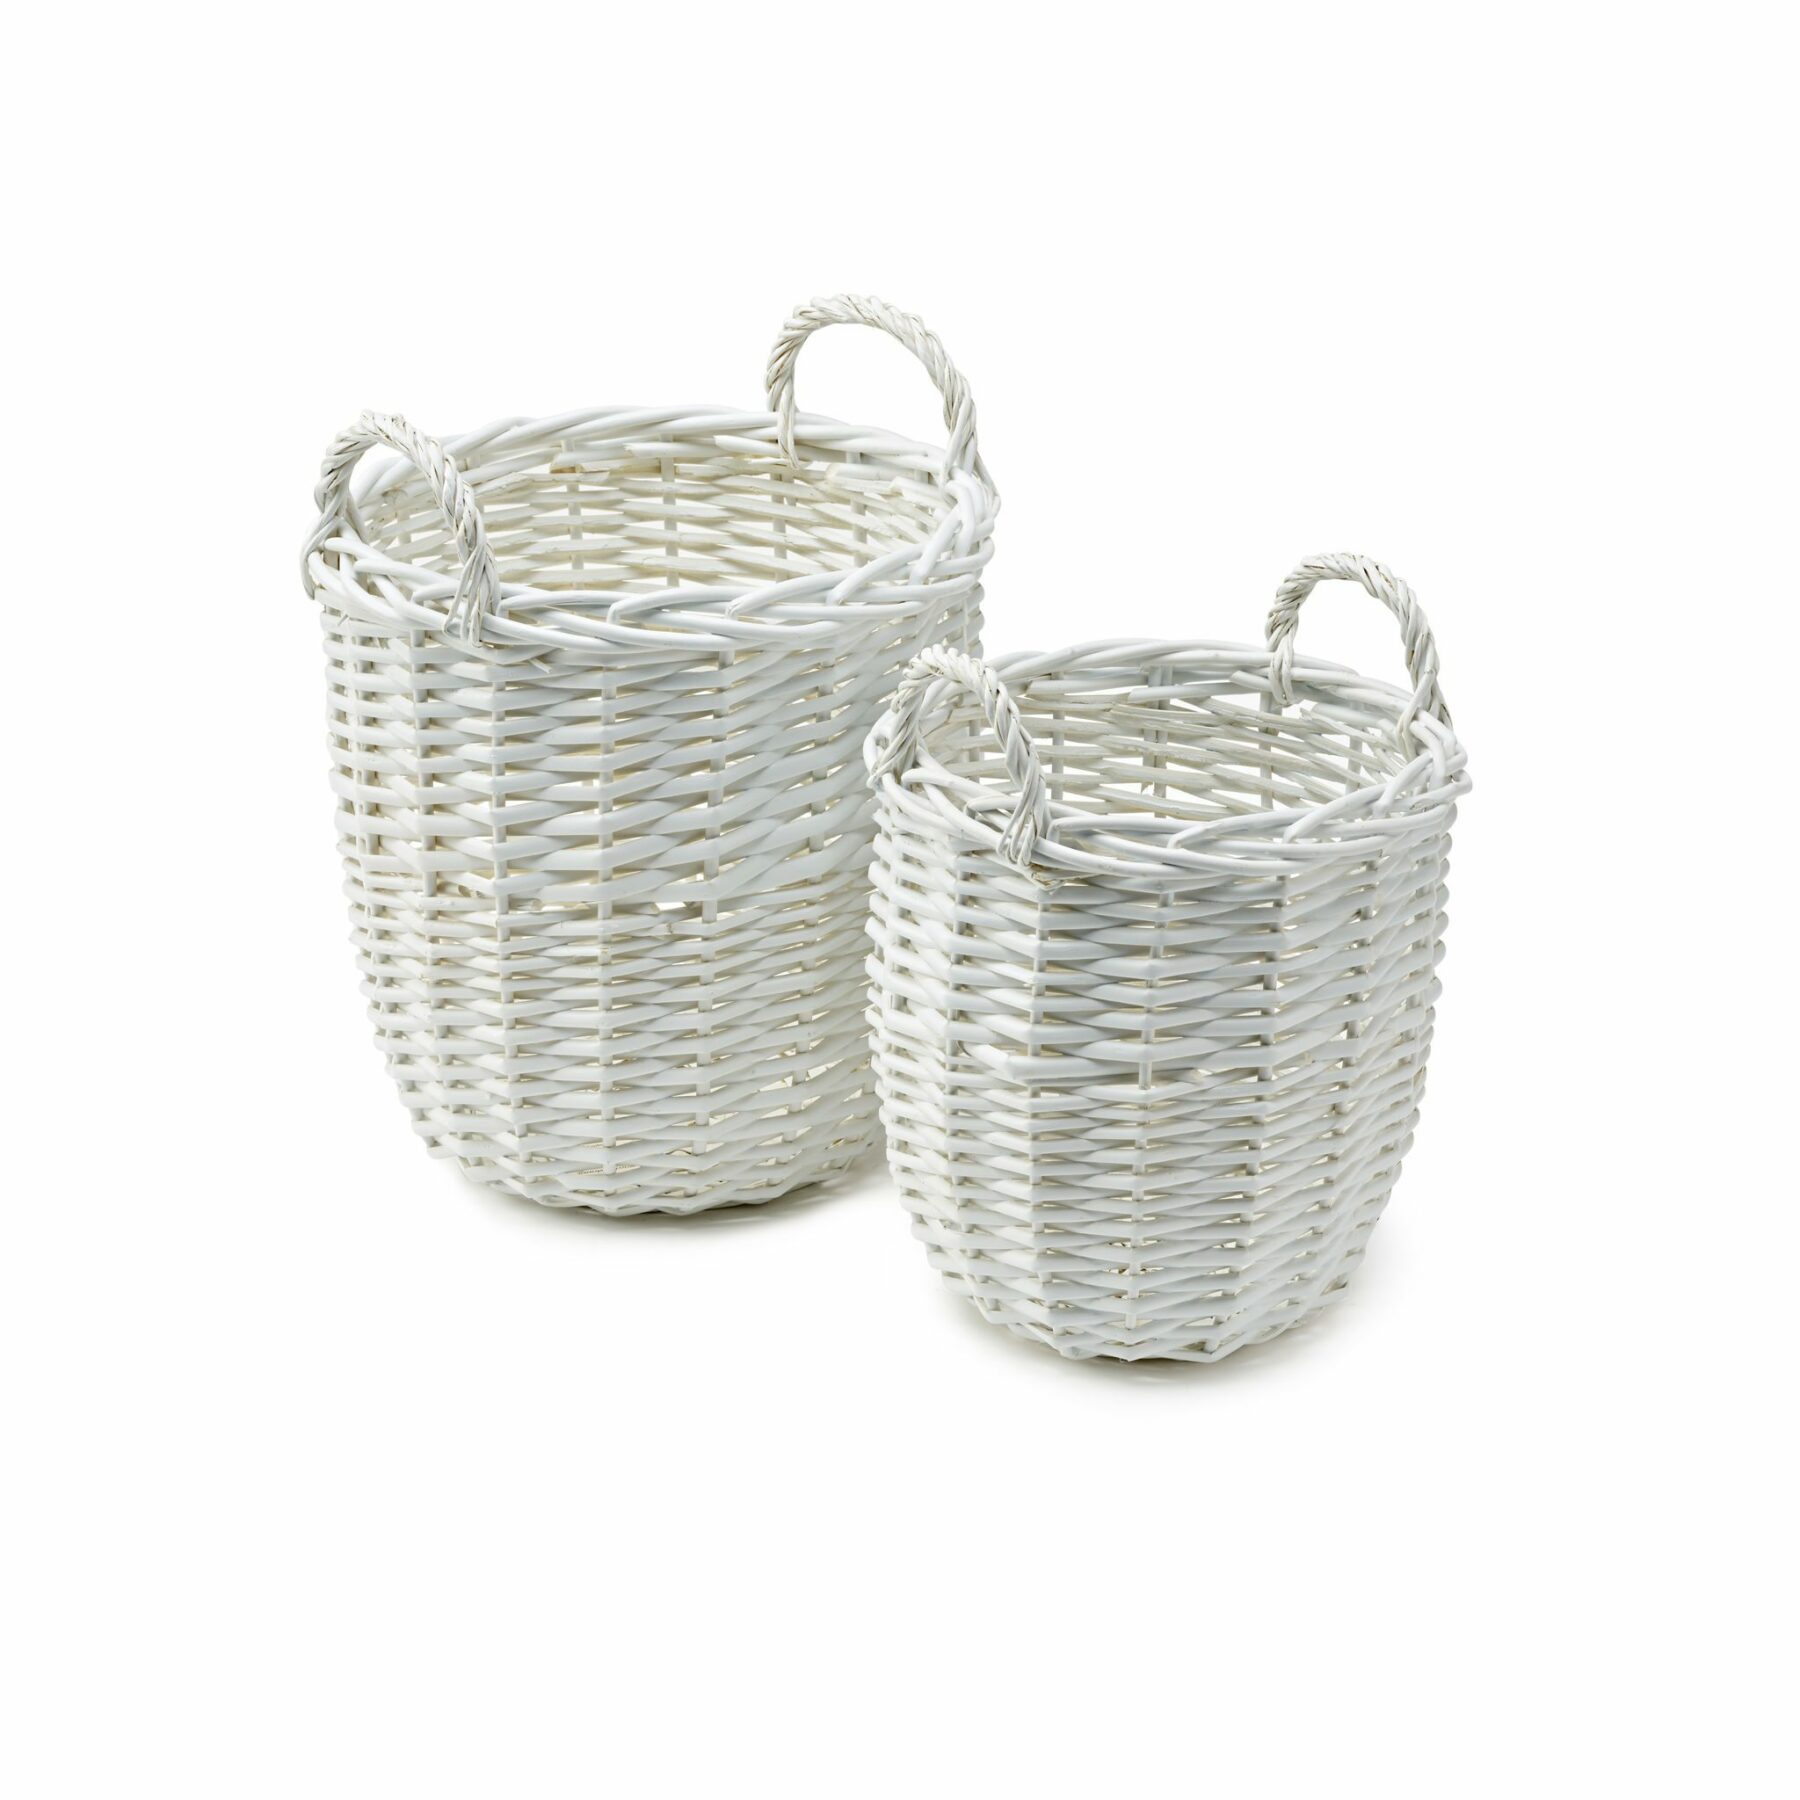 Set of 2 Storage Baskets - White